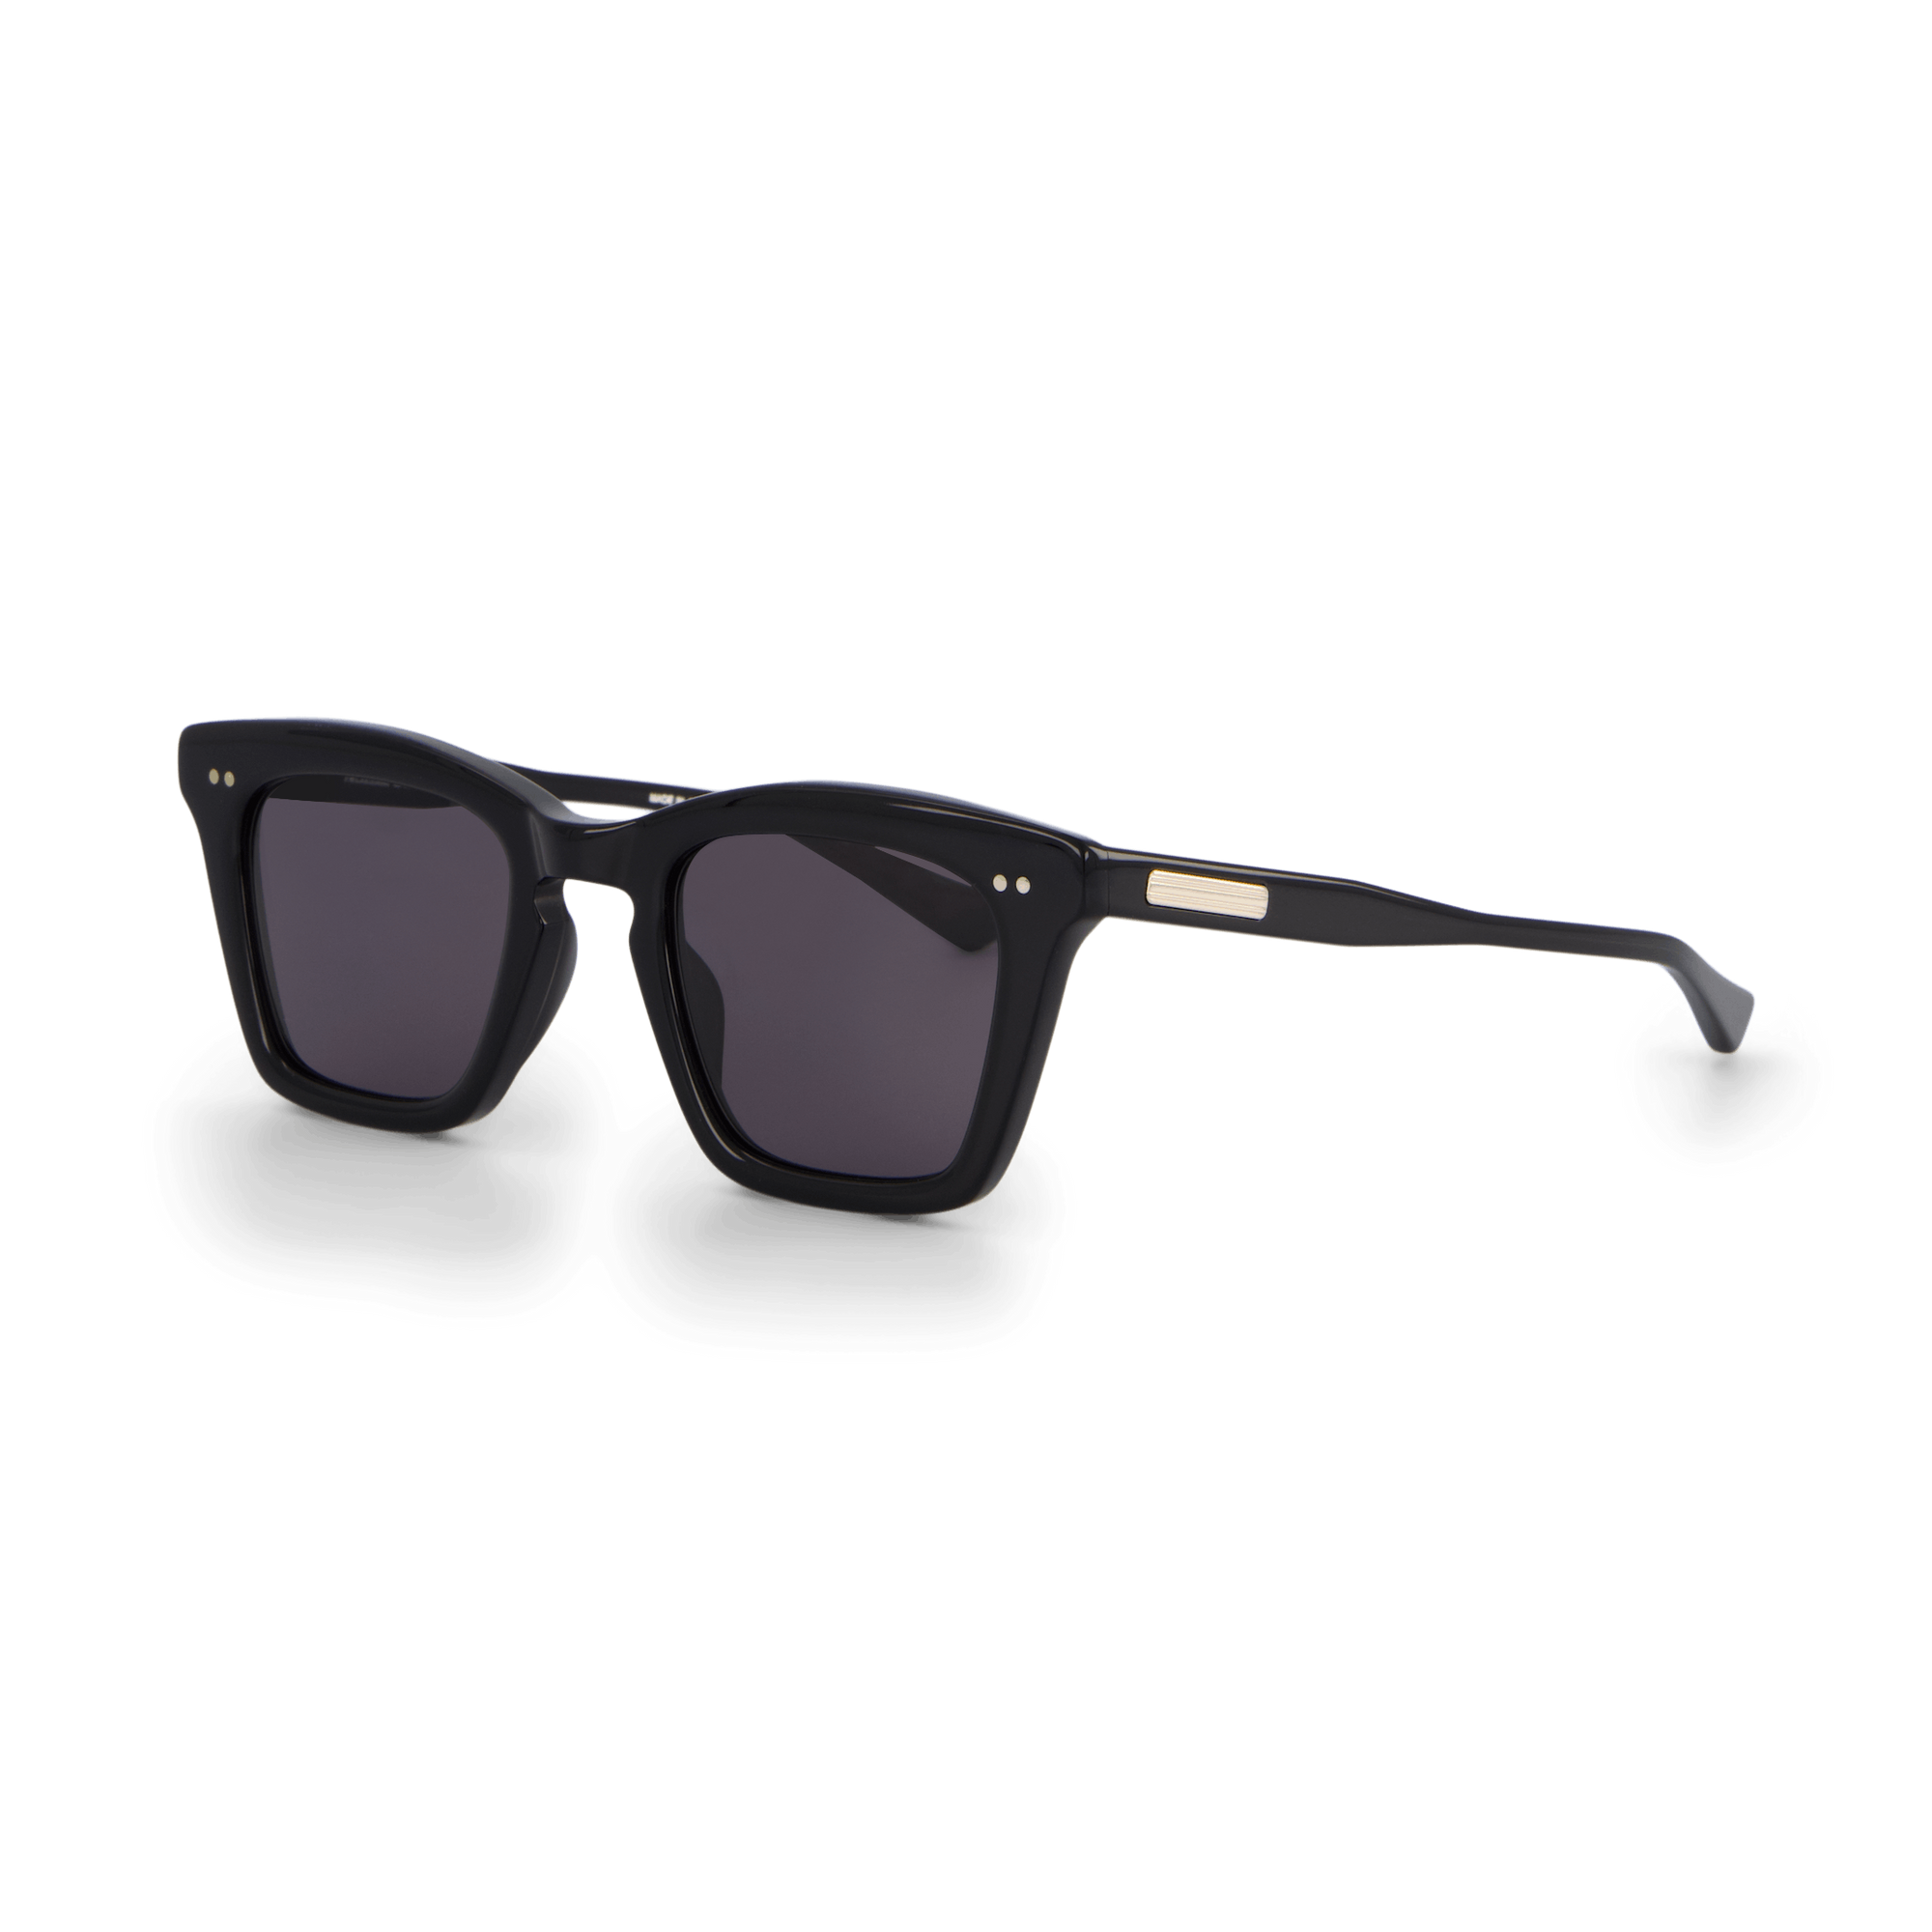 Louis Vuitton La Grande Bellezza Sunglasses Black Acetate. Size W